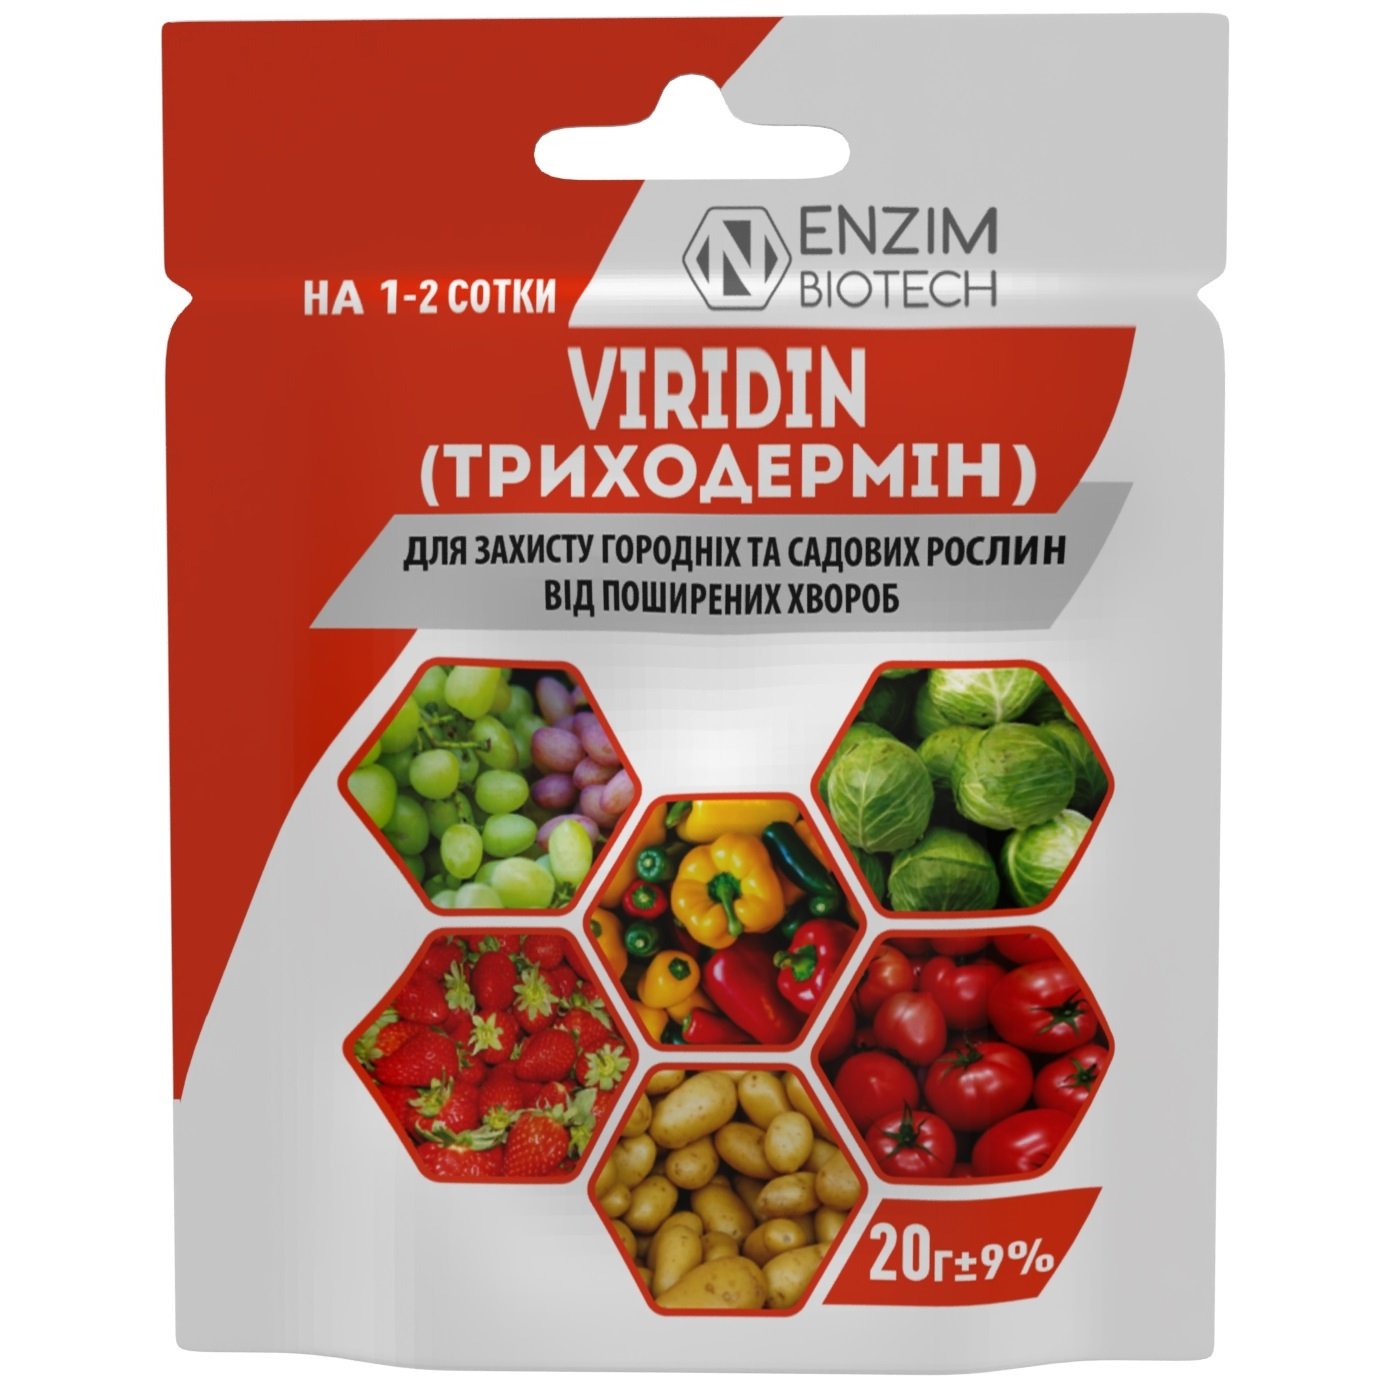 Триходермин Viridin Еnzim-Аgro, 20 г - фото 1